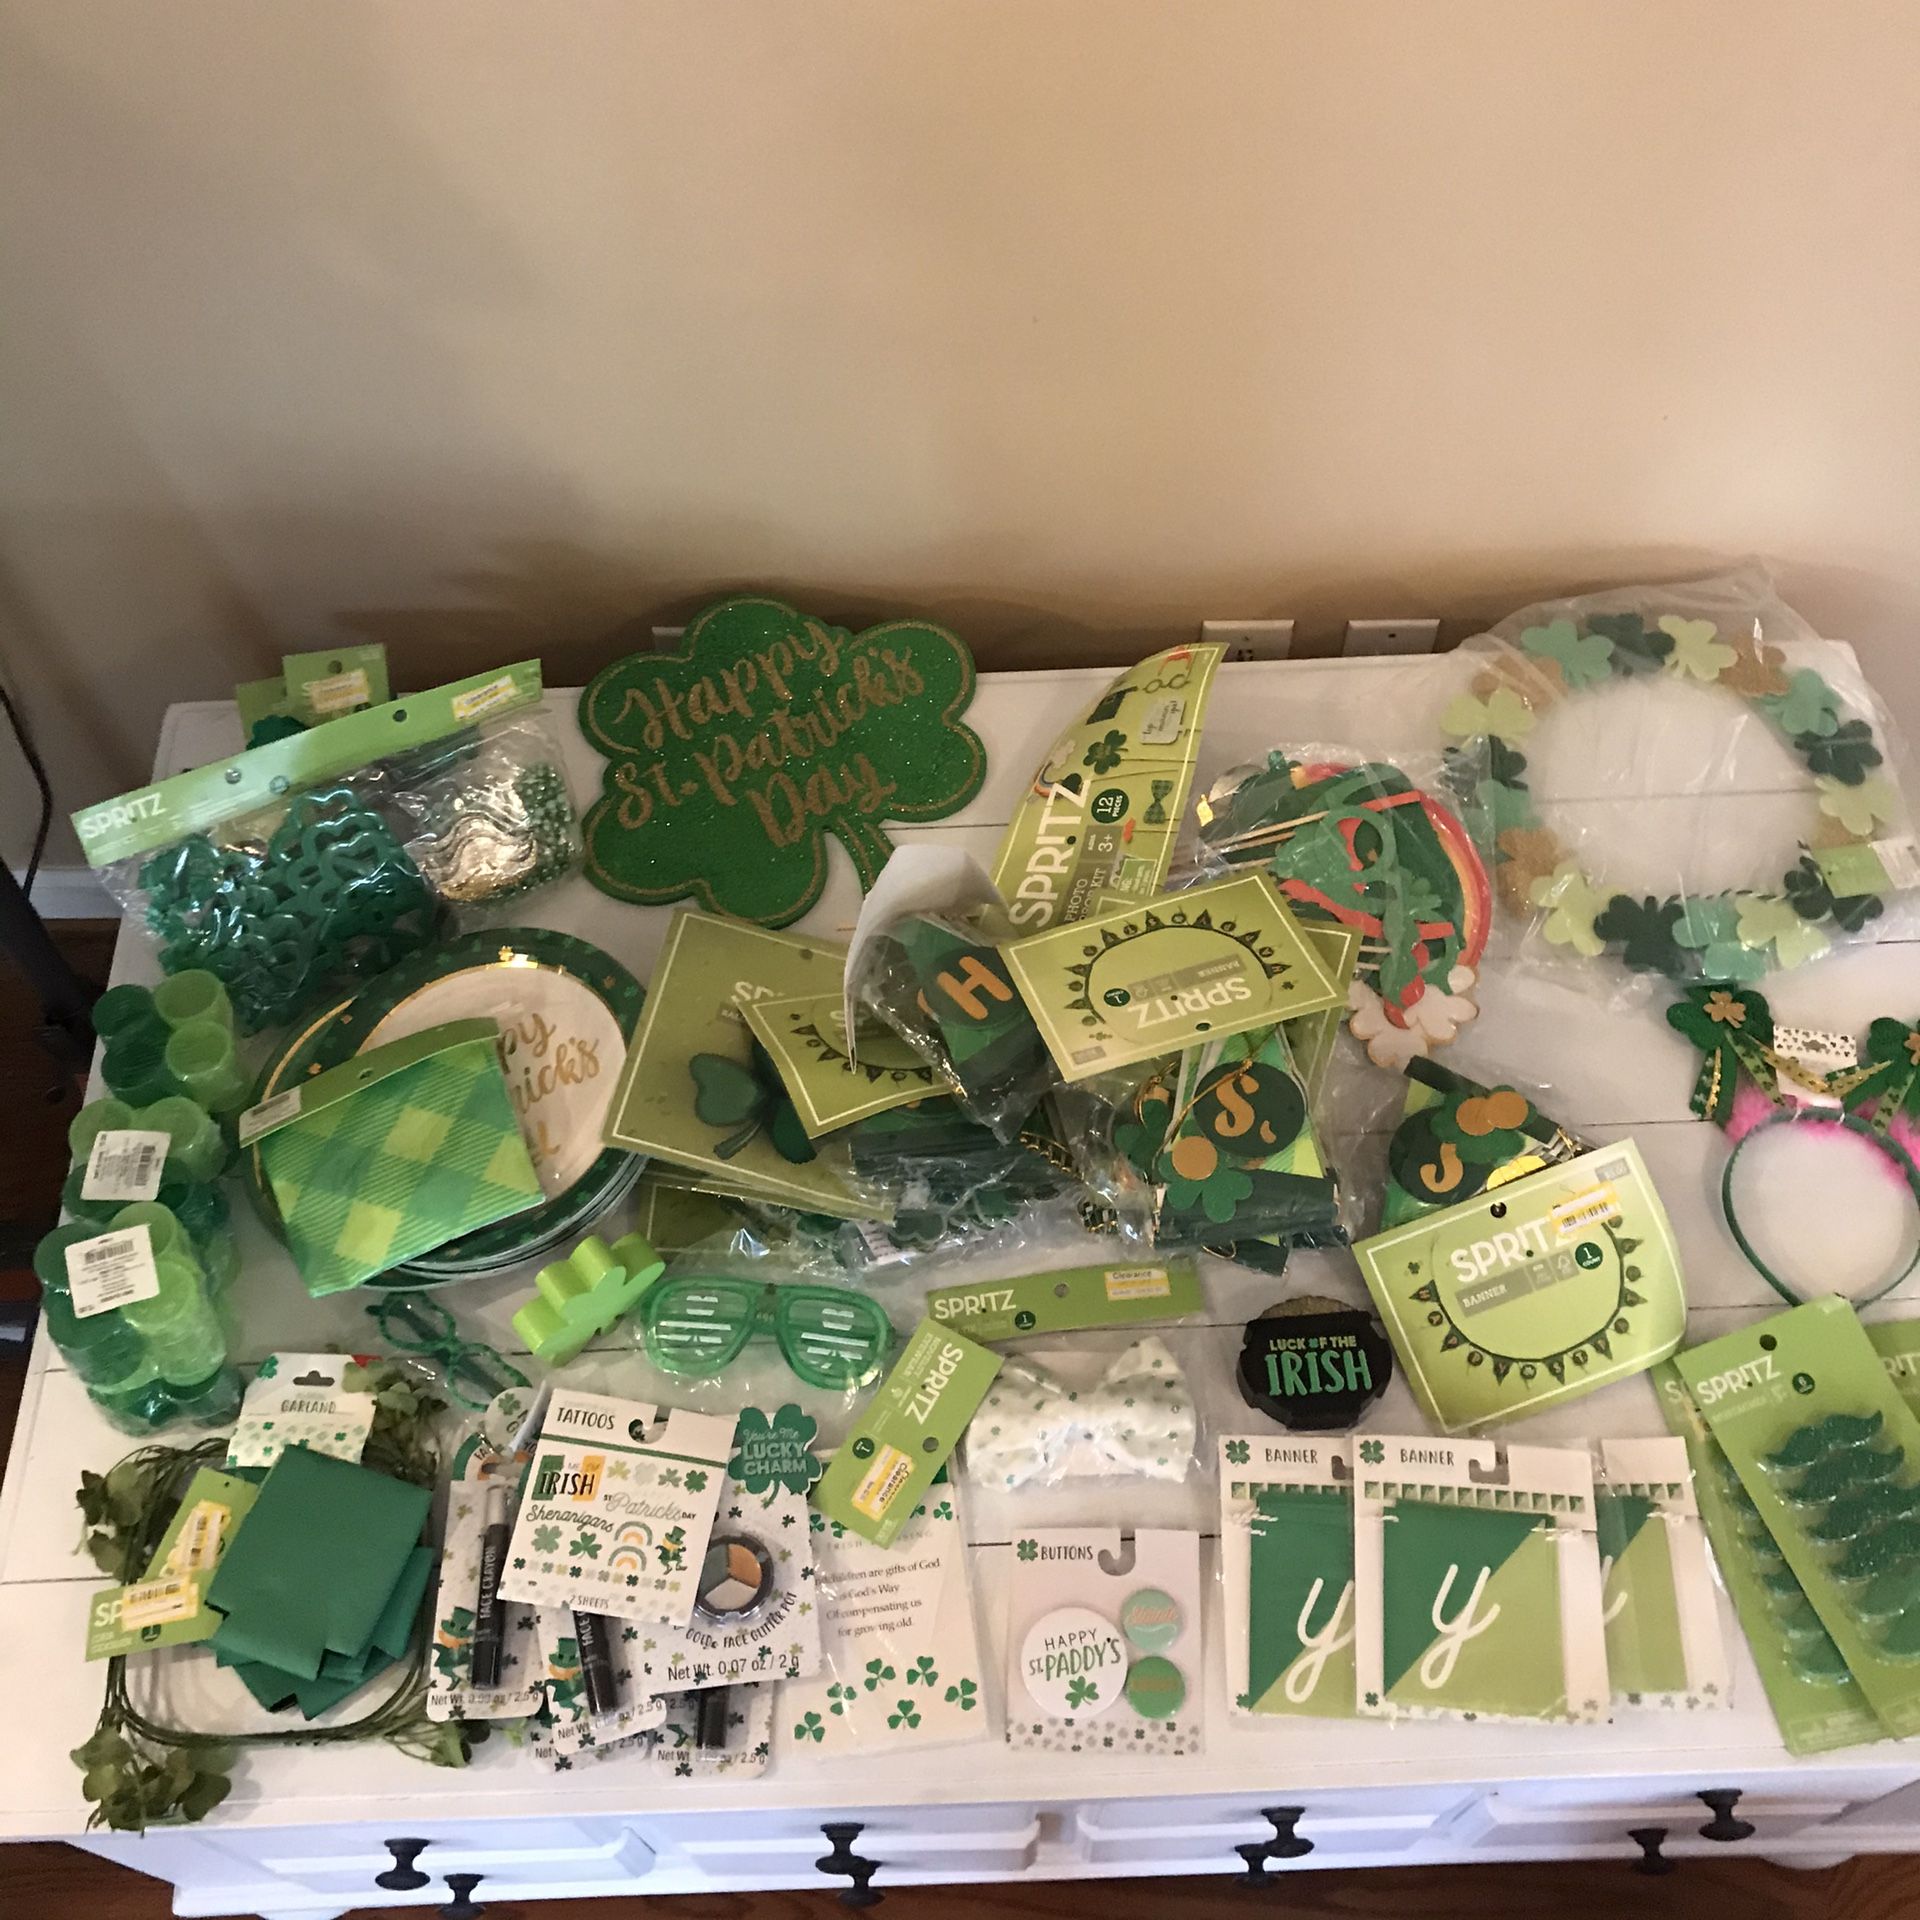 St. Patrick’s Day party kit decorations